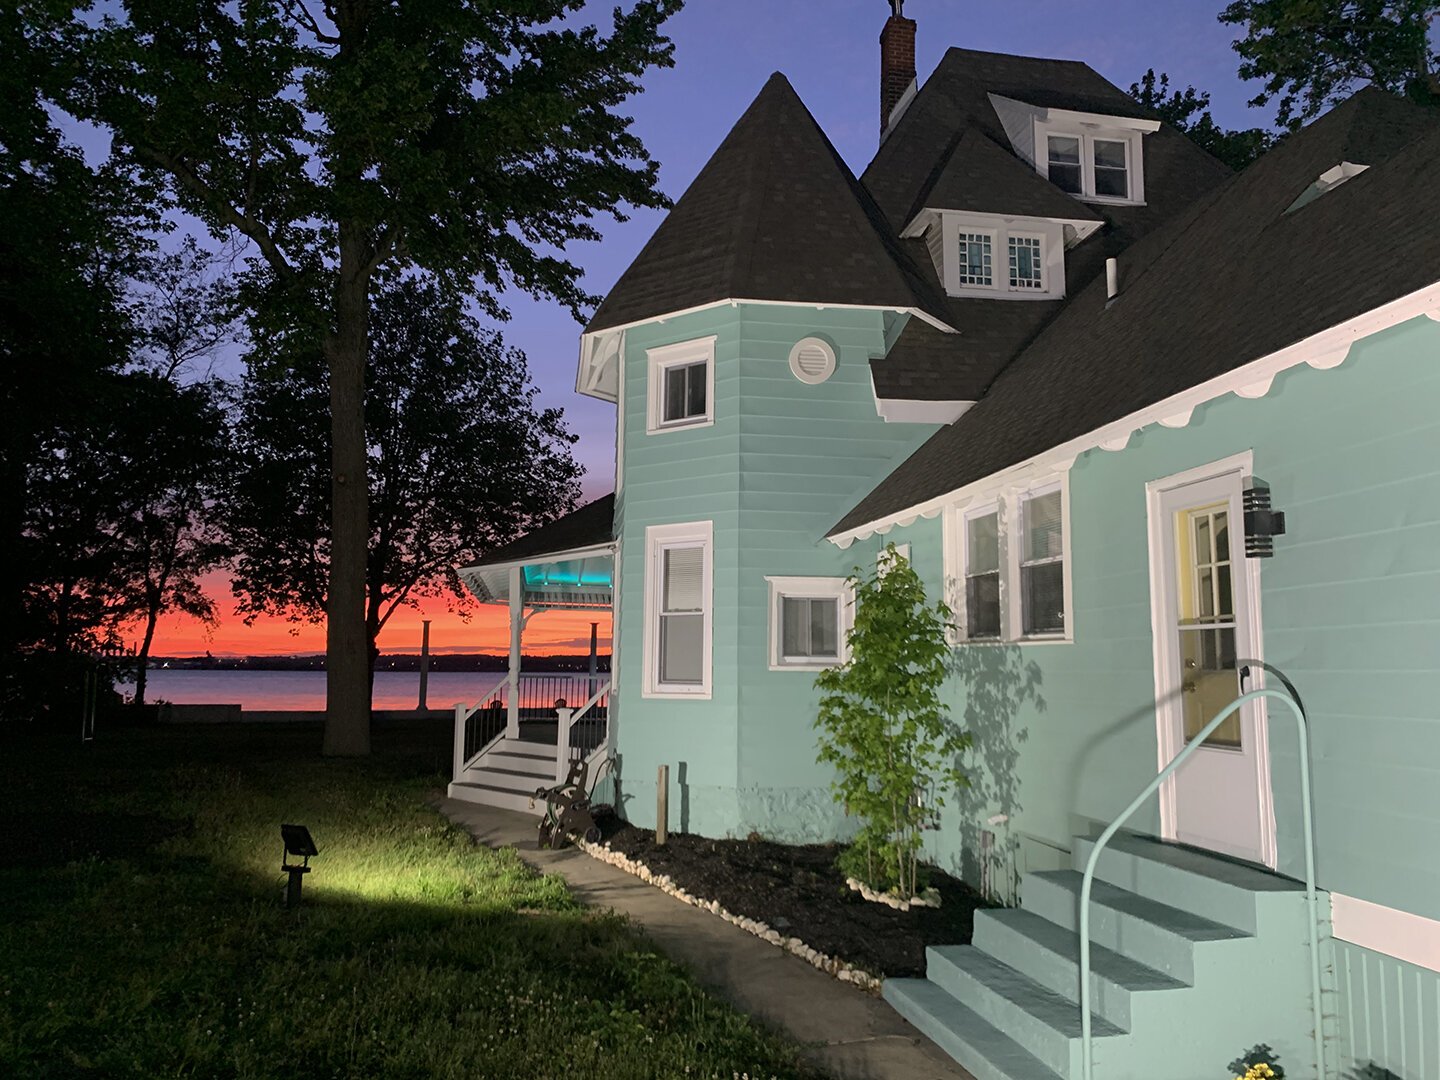 Sunset at Raymond Haldeman's Estate (Copy)